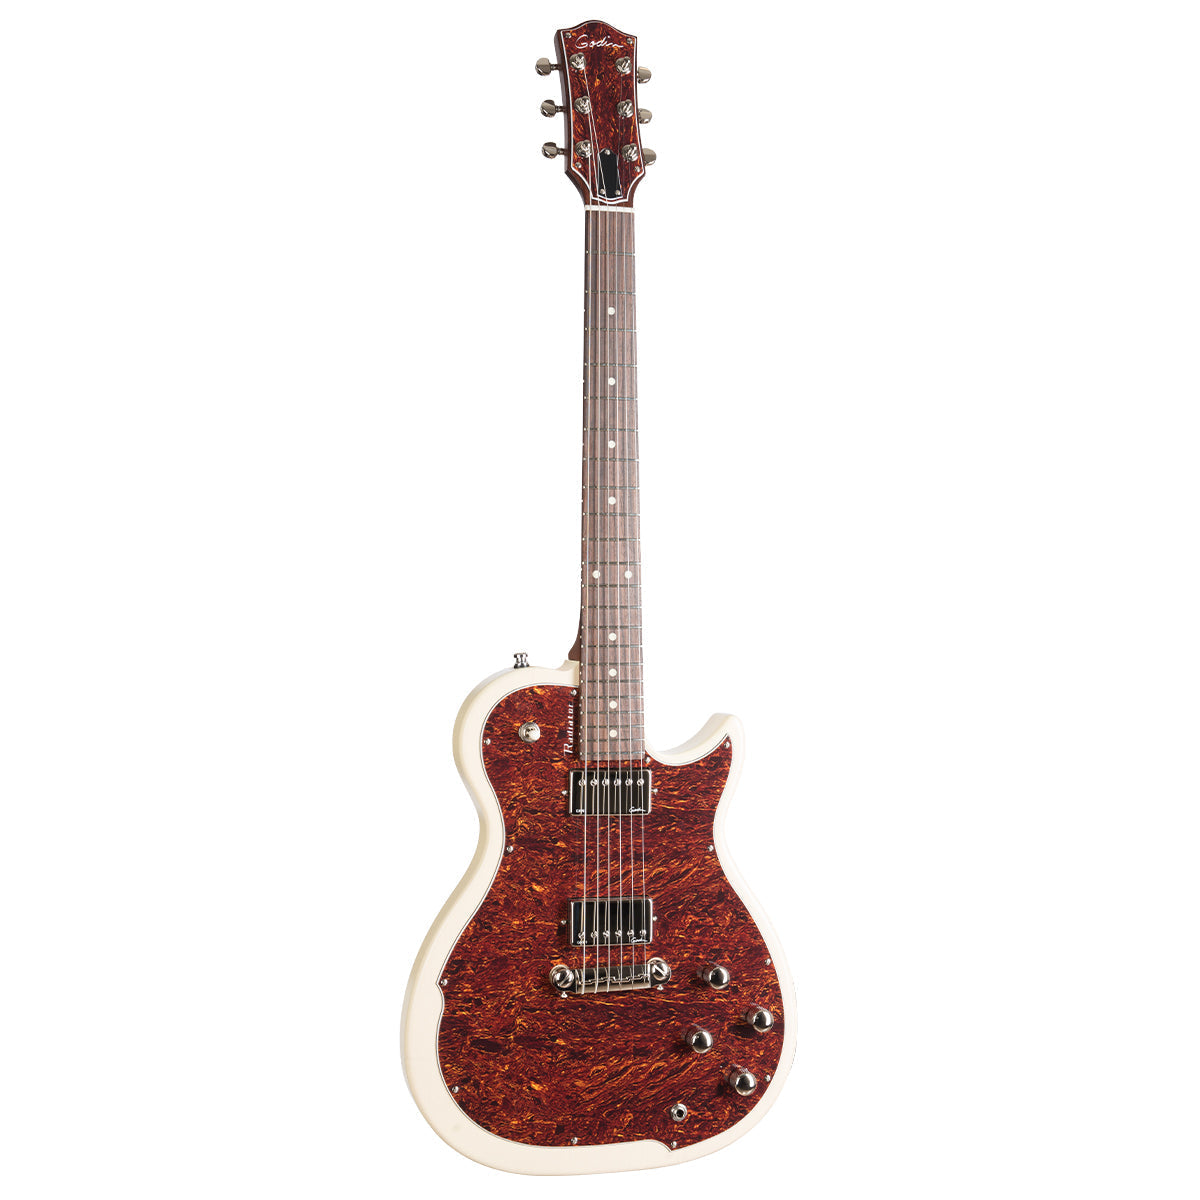 Godin Radiator Electric Guitar ~ Faded Cream RN, Electric Guitar for sale at Richards Guitars.